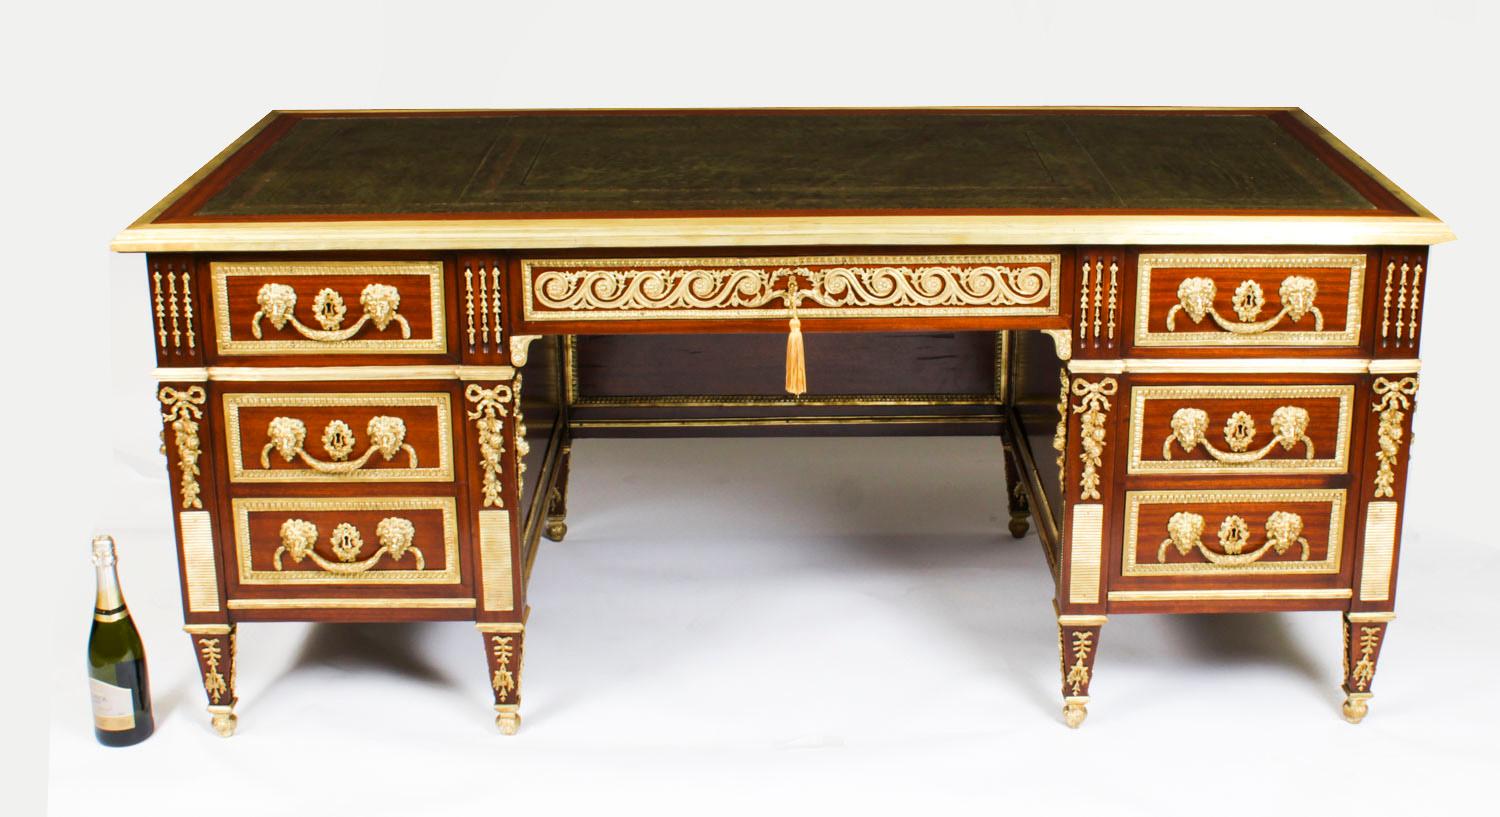 Antique 6ft/184cm Ormolu Mounted French Empire Revival Pedestal Desk 1920s For Sale 15